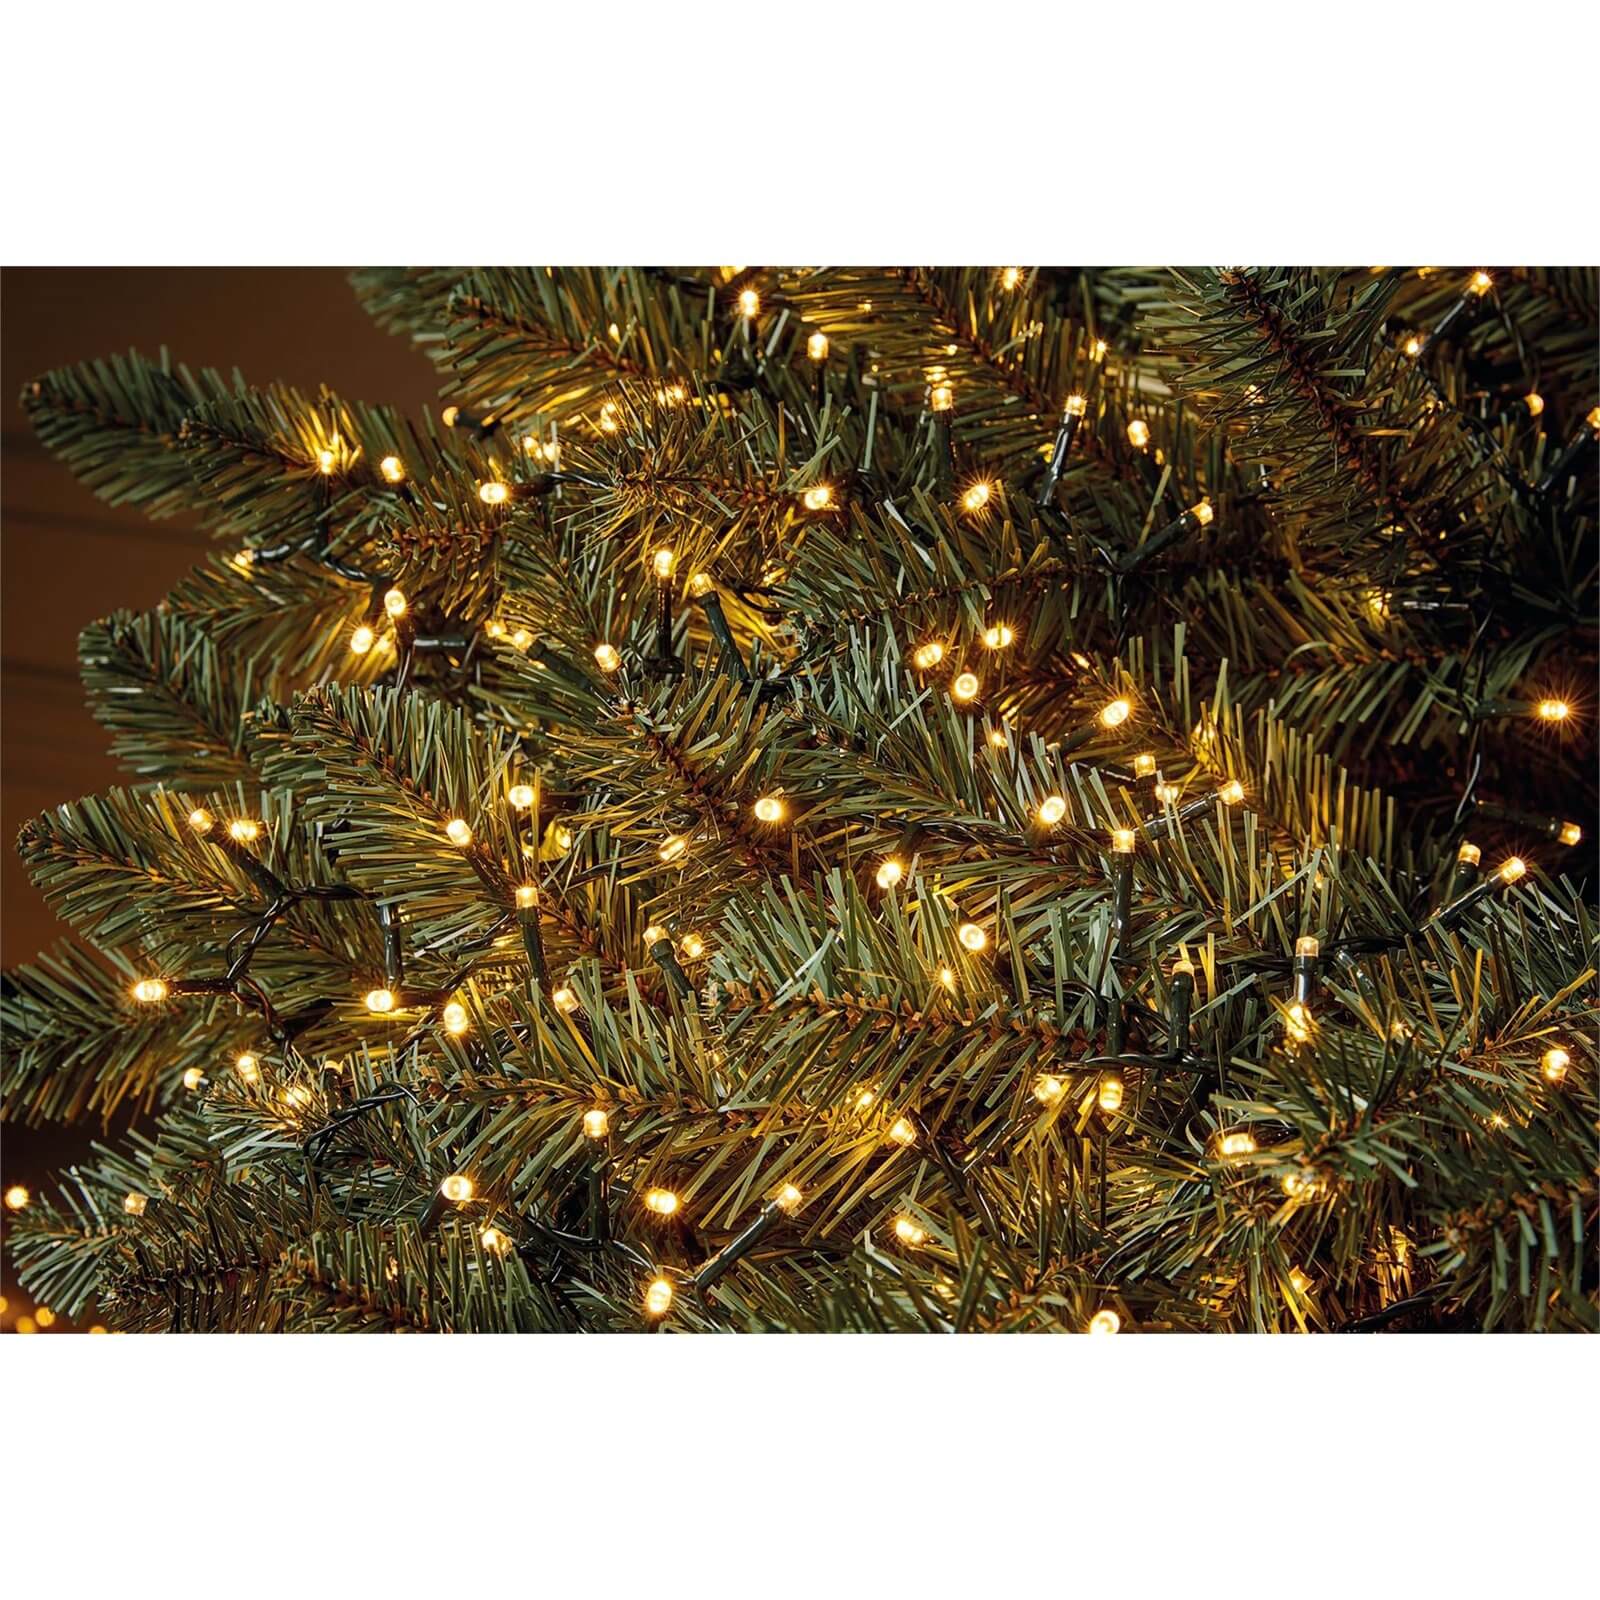 Photo of 200 Led String Christmas Tree Lights - Warm White